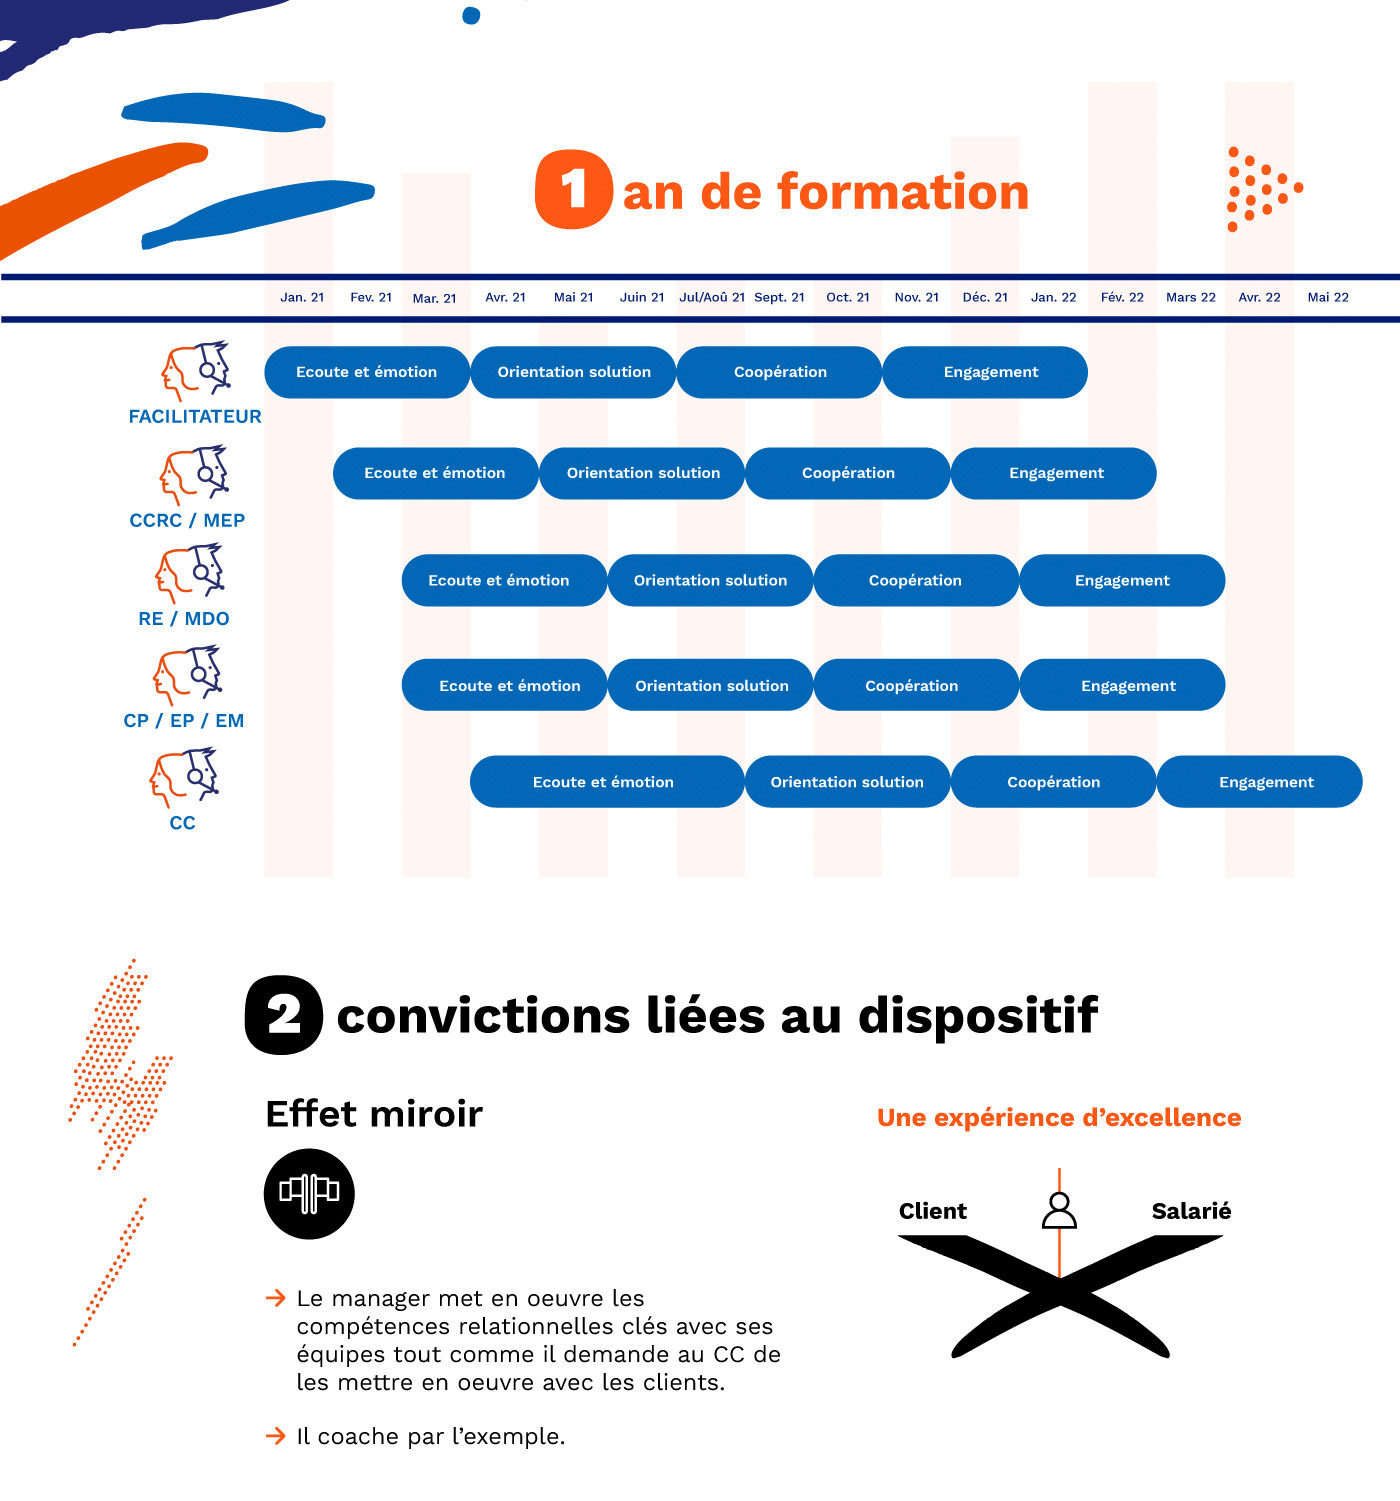 03 EDF creation infographie formation raphiste savoie chambery